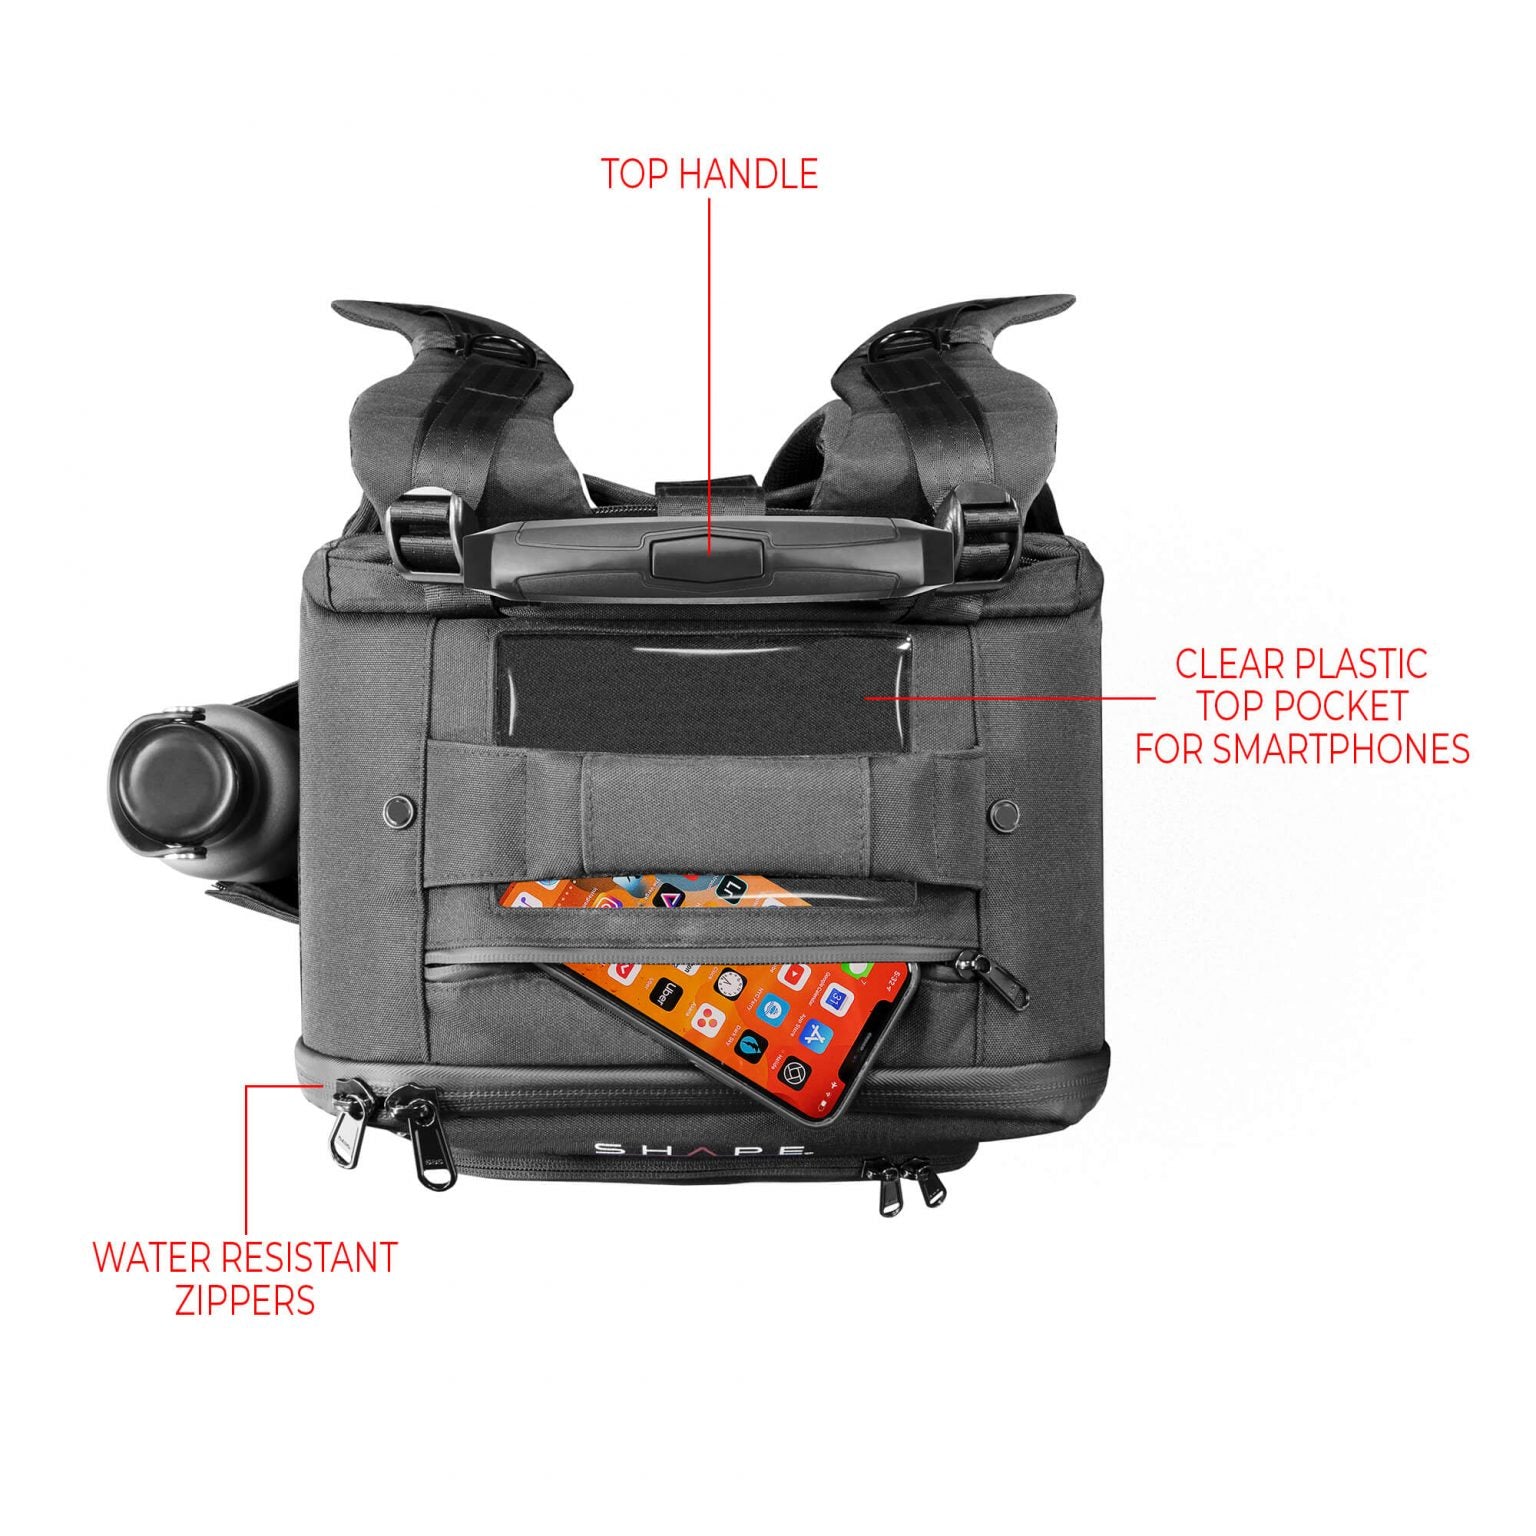 SHAPE Pro Video Camera Backpack - SHAPE wlb